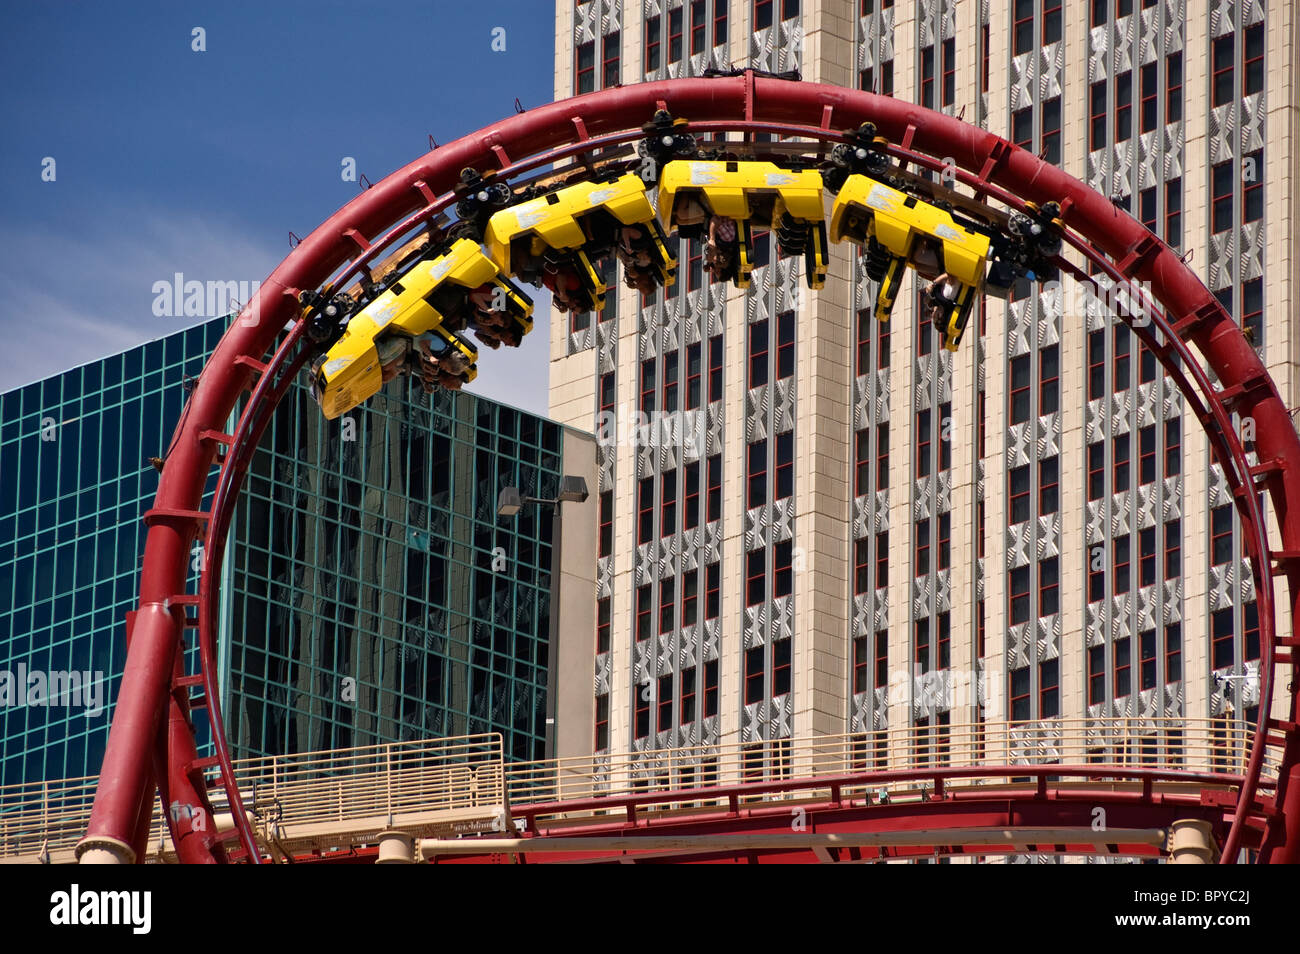 Nevada, Las Vegas, New York New York Hotel, roller coaster ride Stock Photo